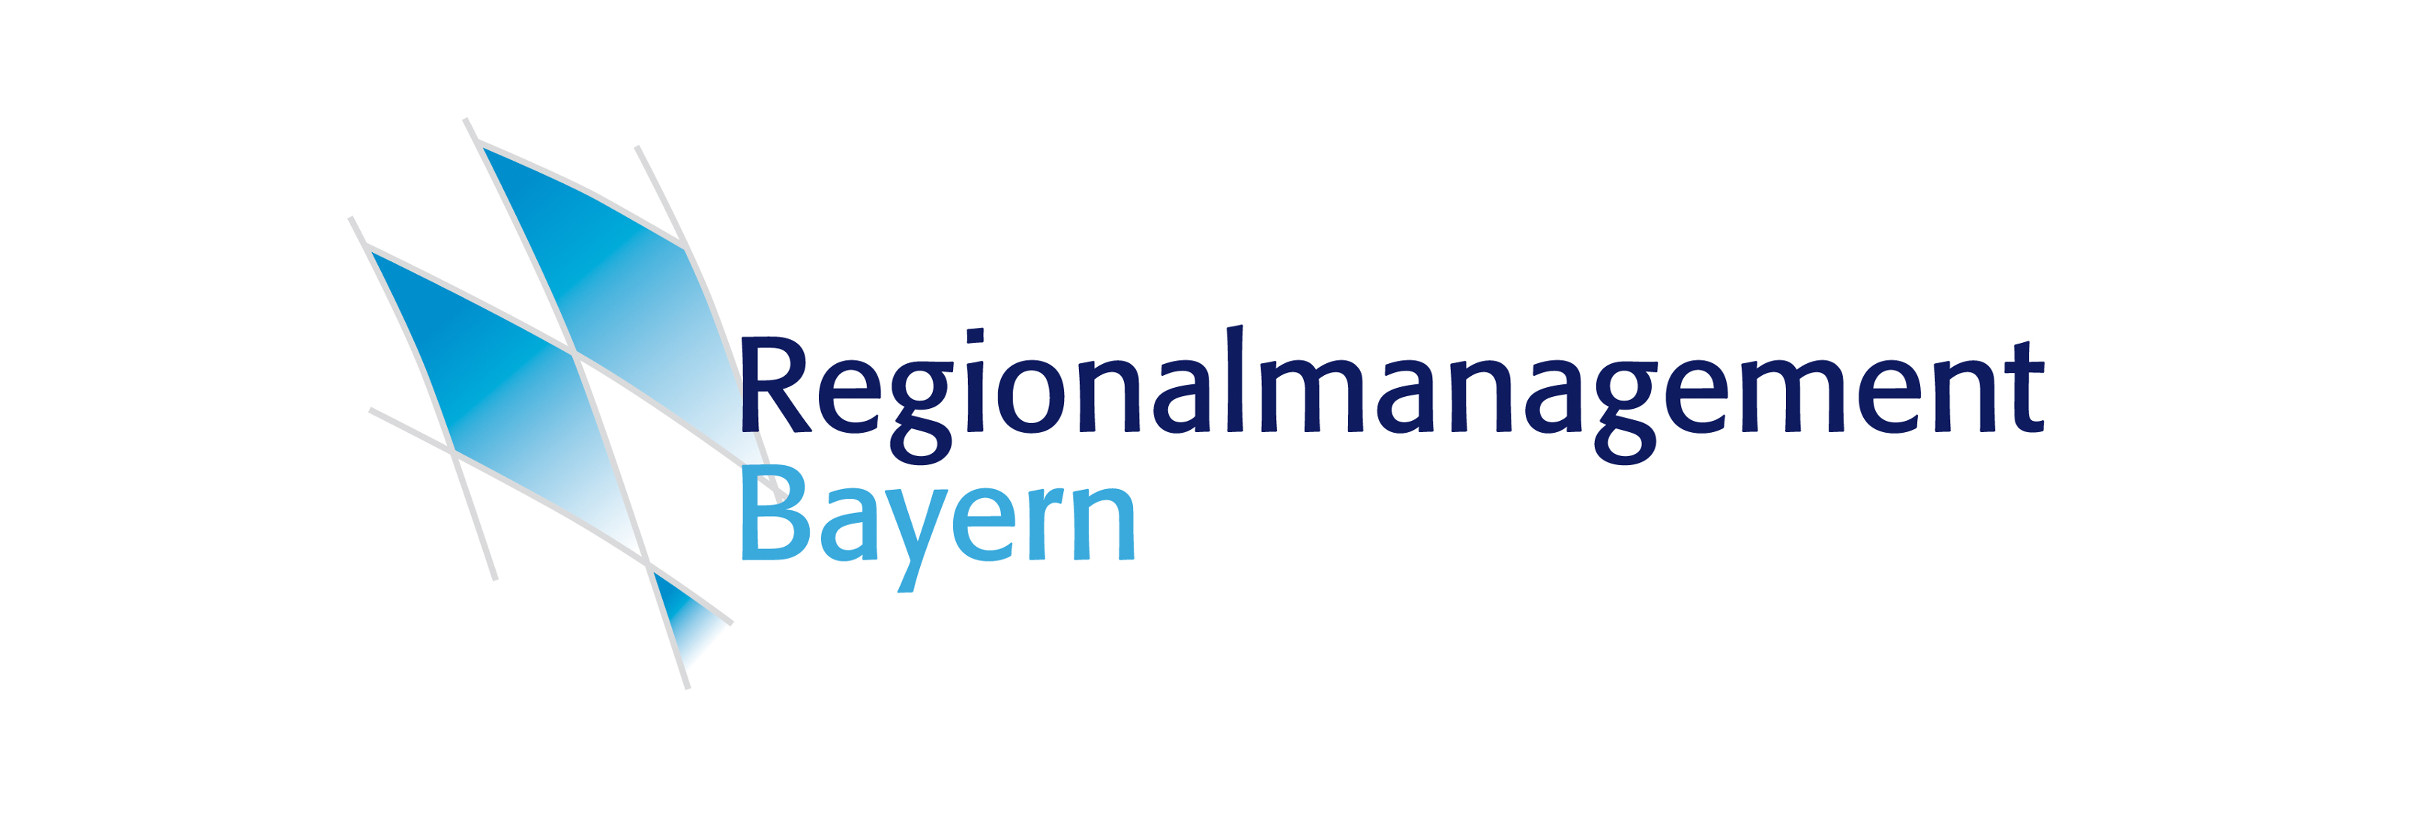 Regionalmanagement Bayern.jpg